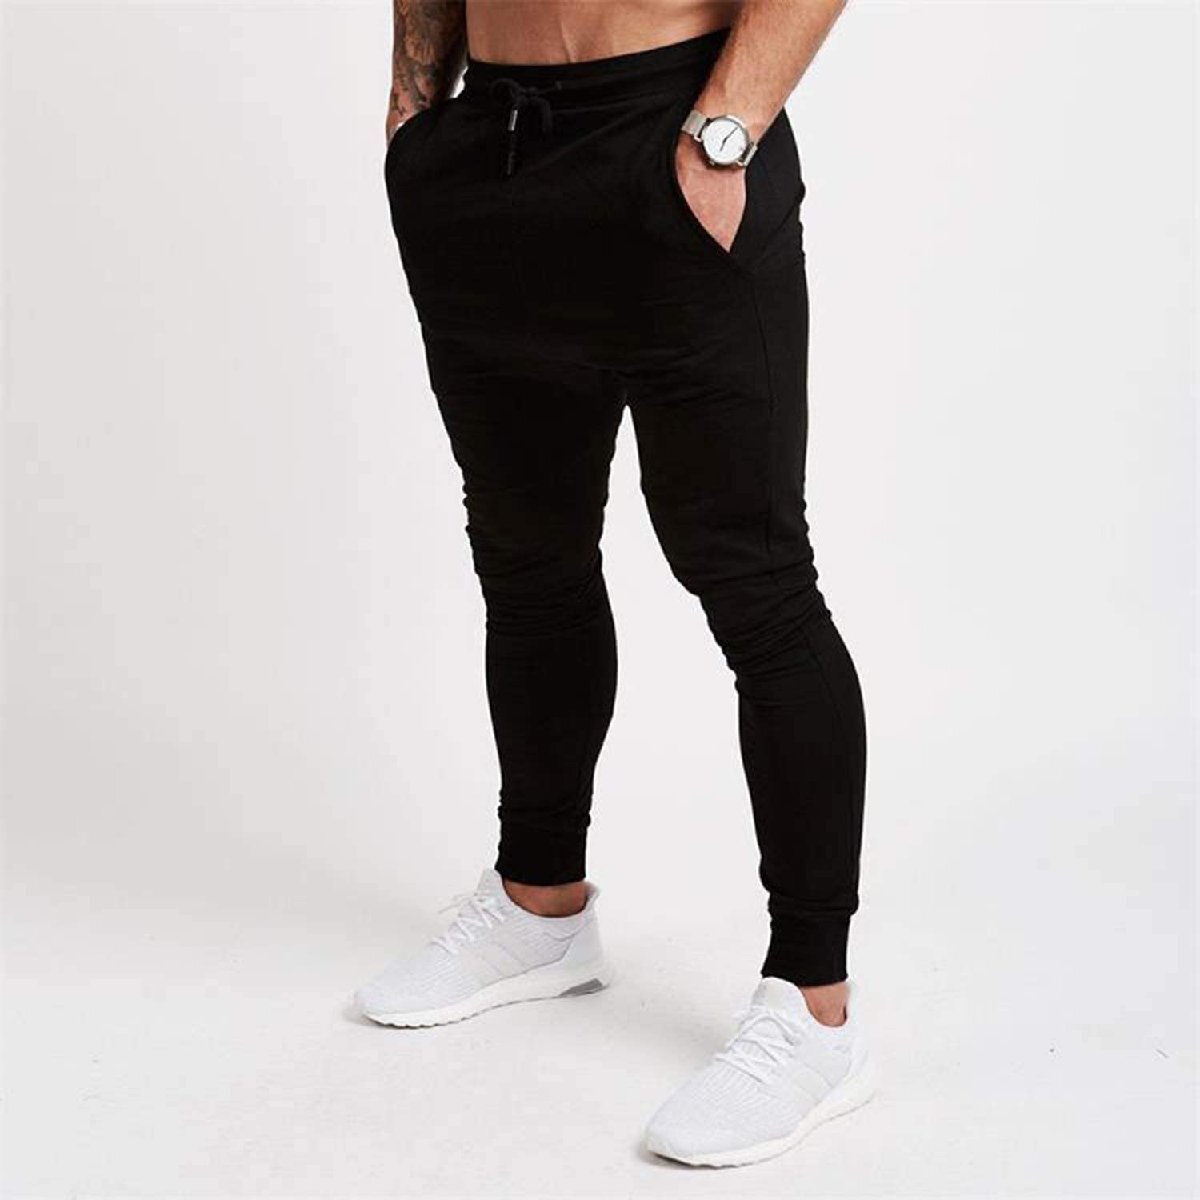 [Manatsulife] men's training pants Jim jogger pants fitness slim sweat pants long pants plain K02 (